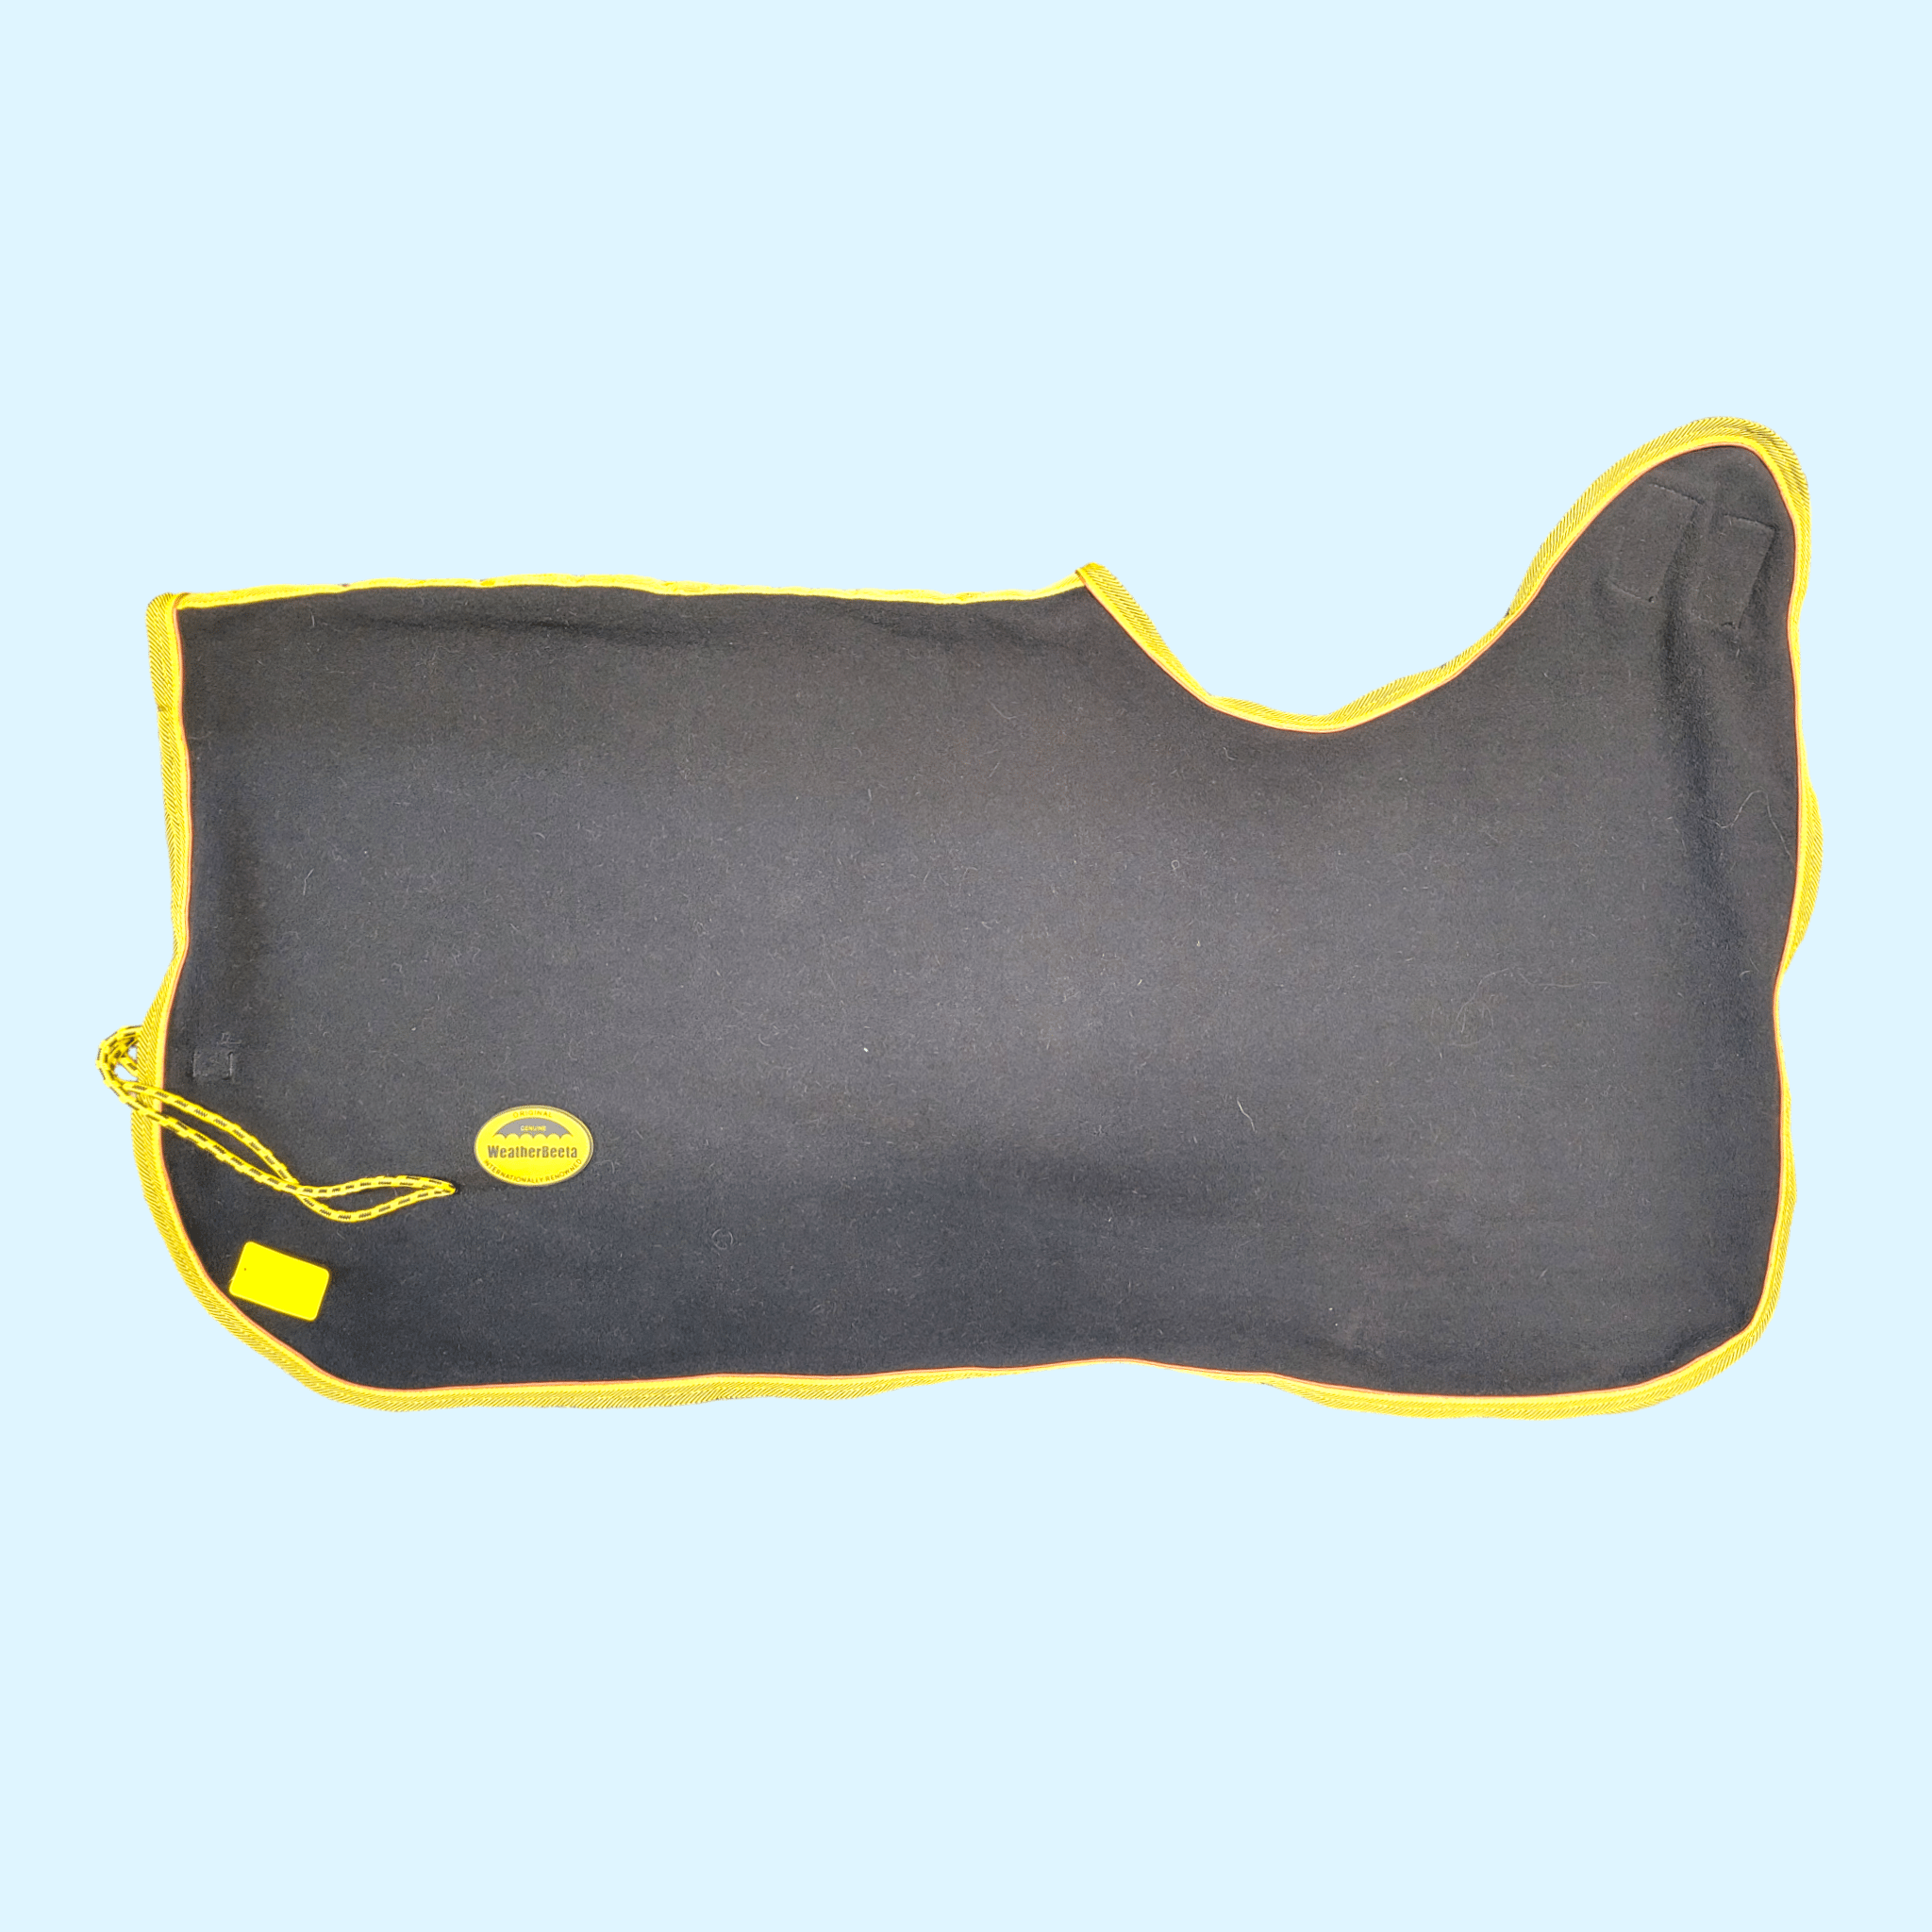 Weatherbeeta Fleece Quarter Sheet in Black/Yellow - 54"